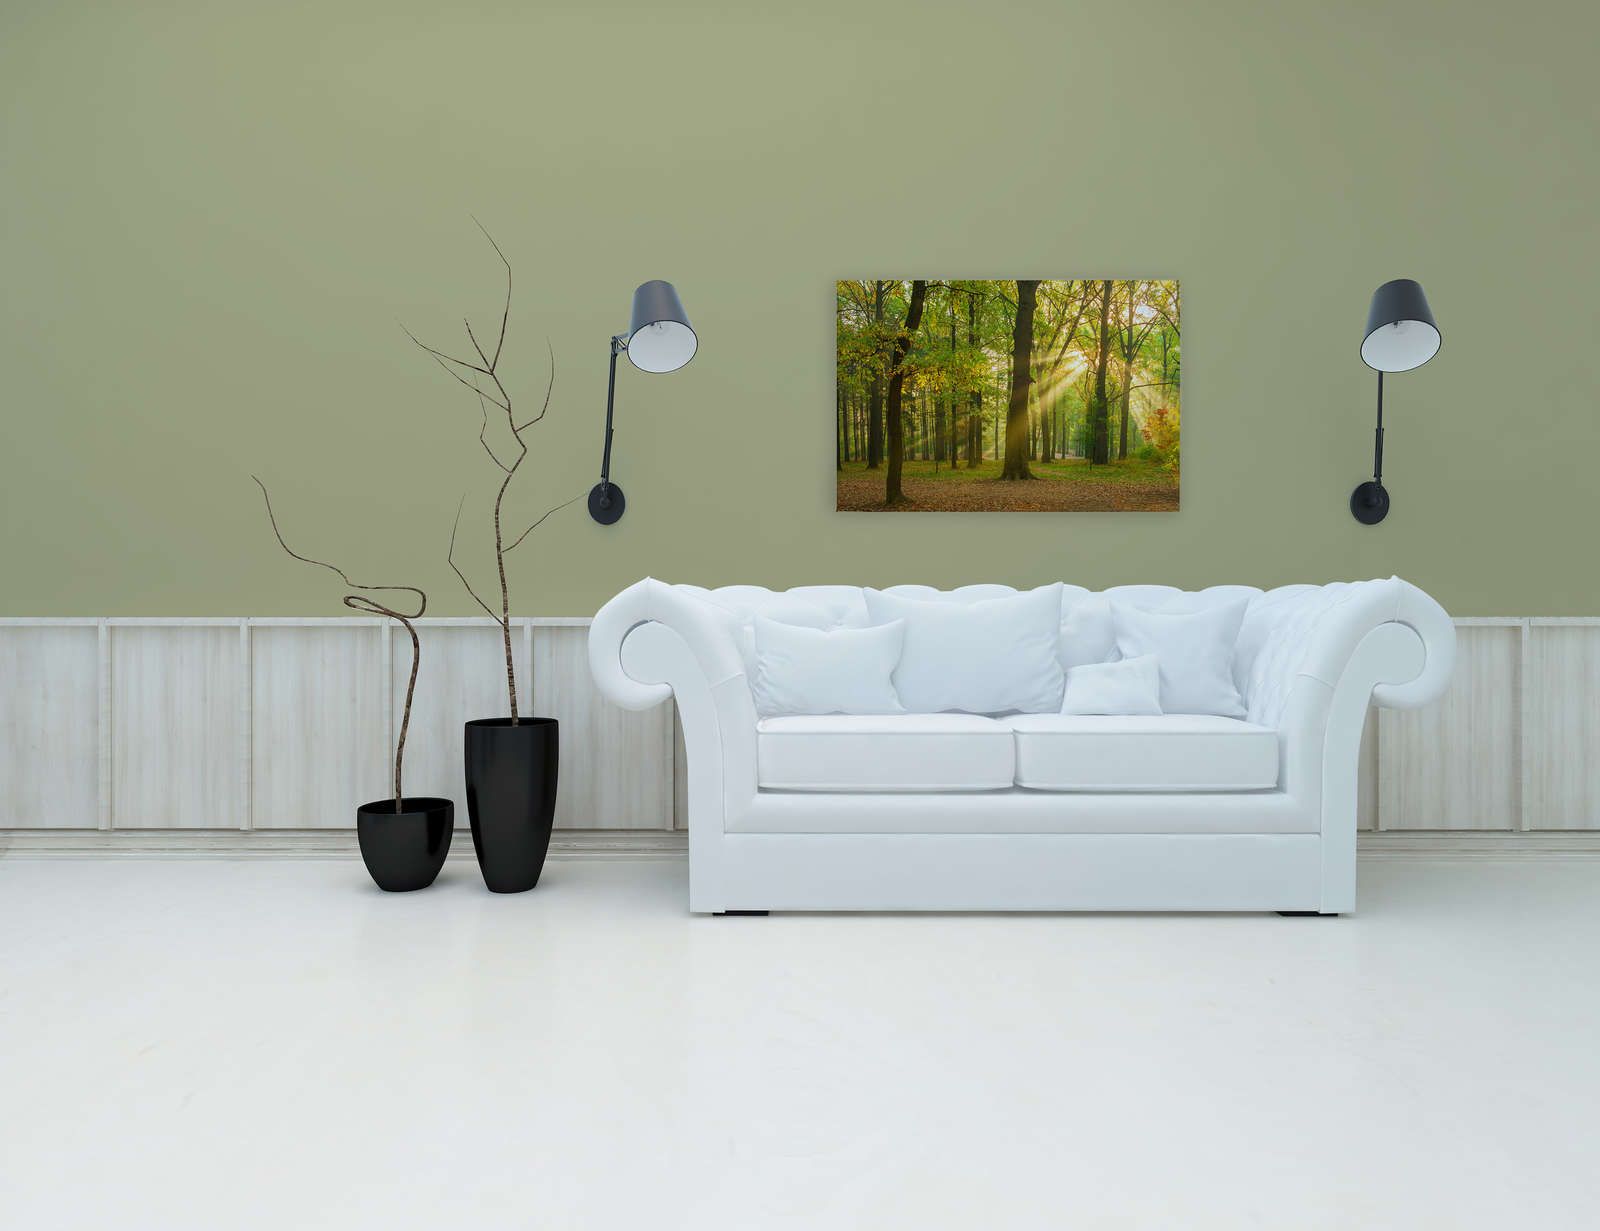             Canvas painting Forest Landscape in Autumn - 0,90 m x 0,60 m
        